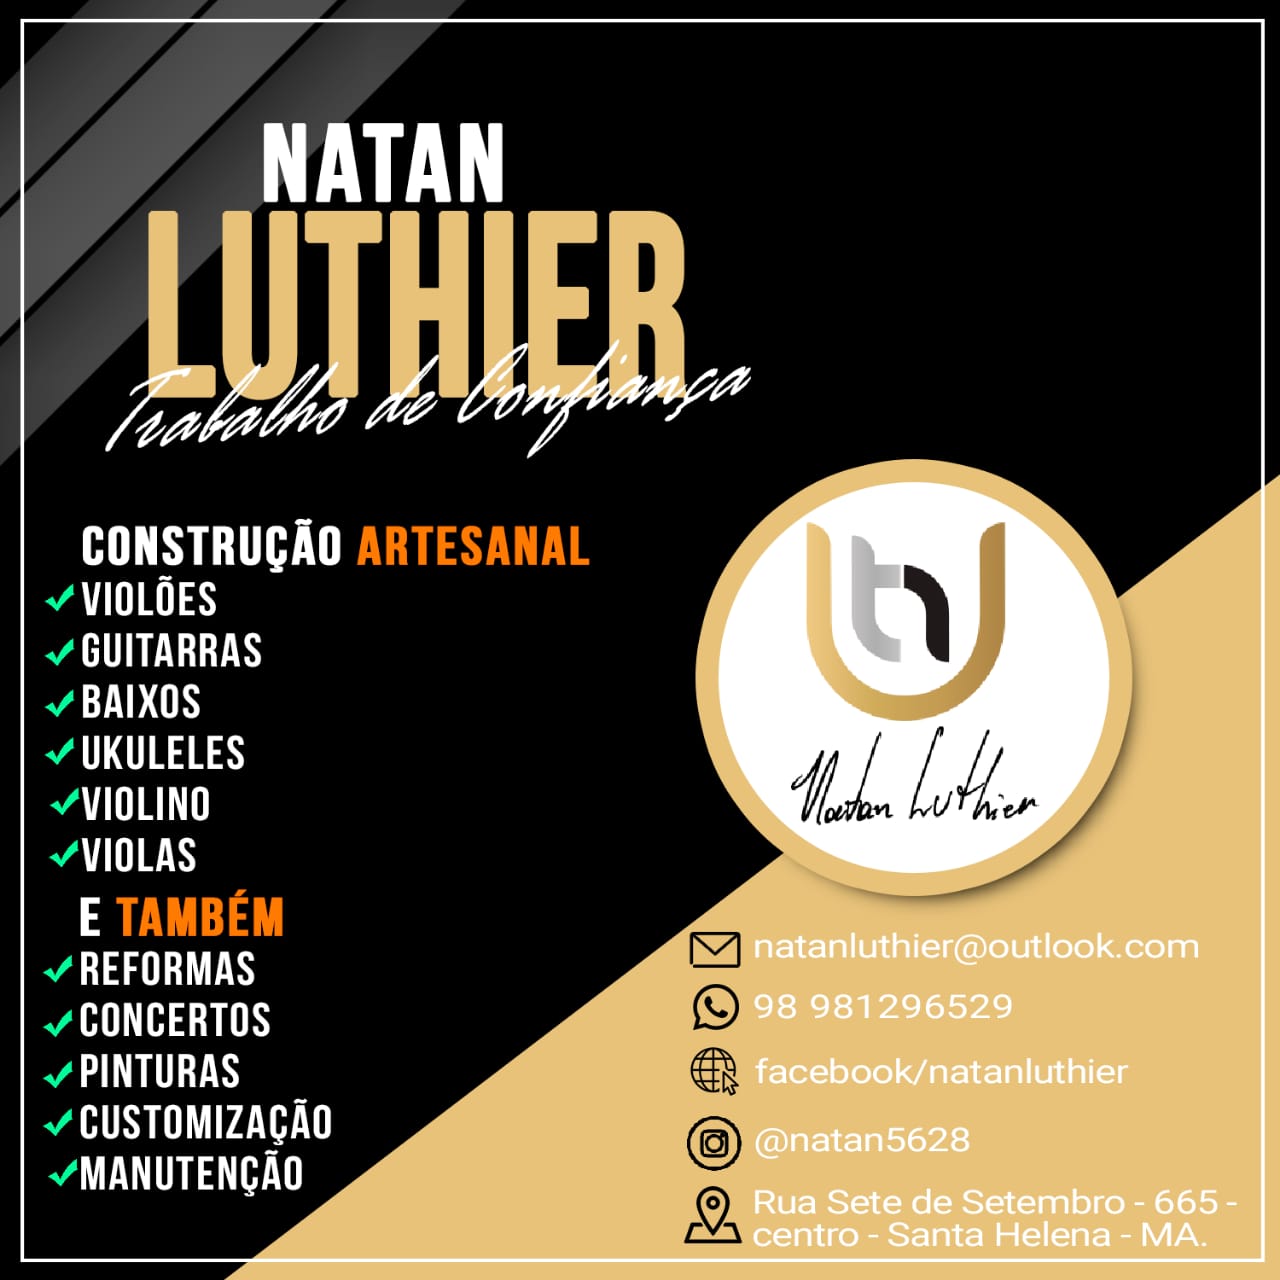 NATAN LUTHIER